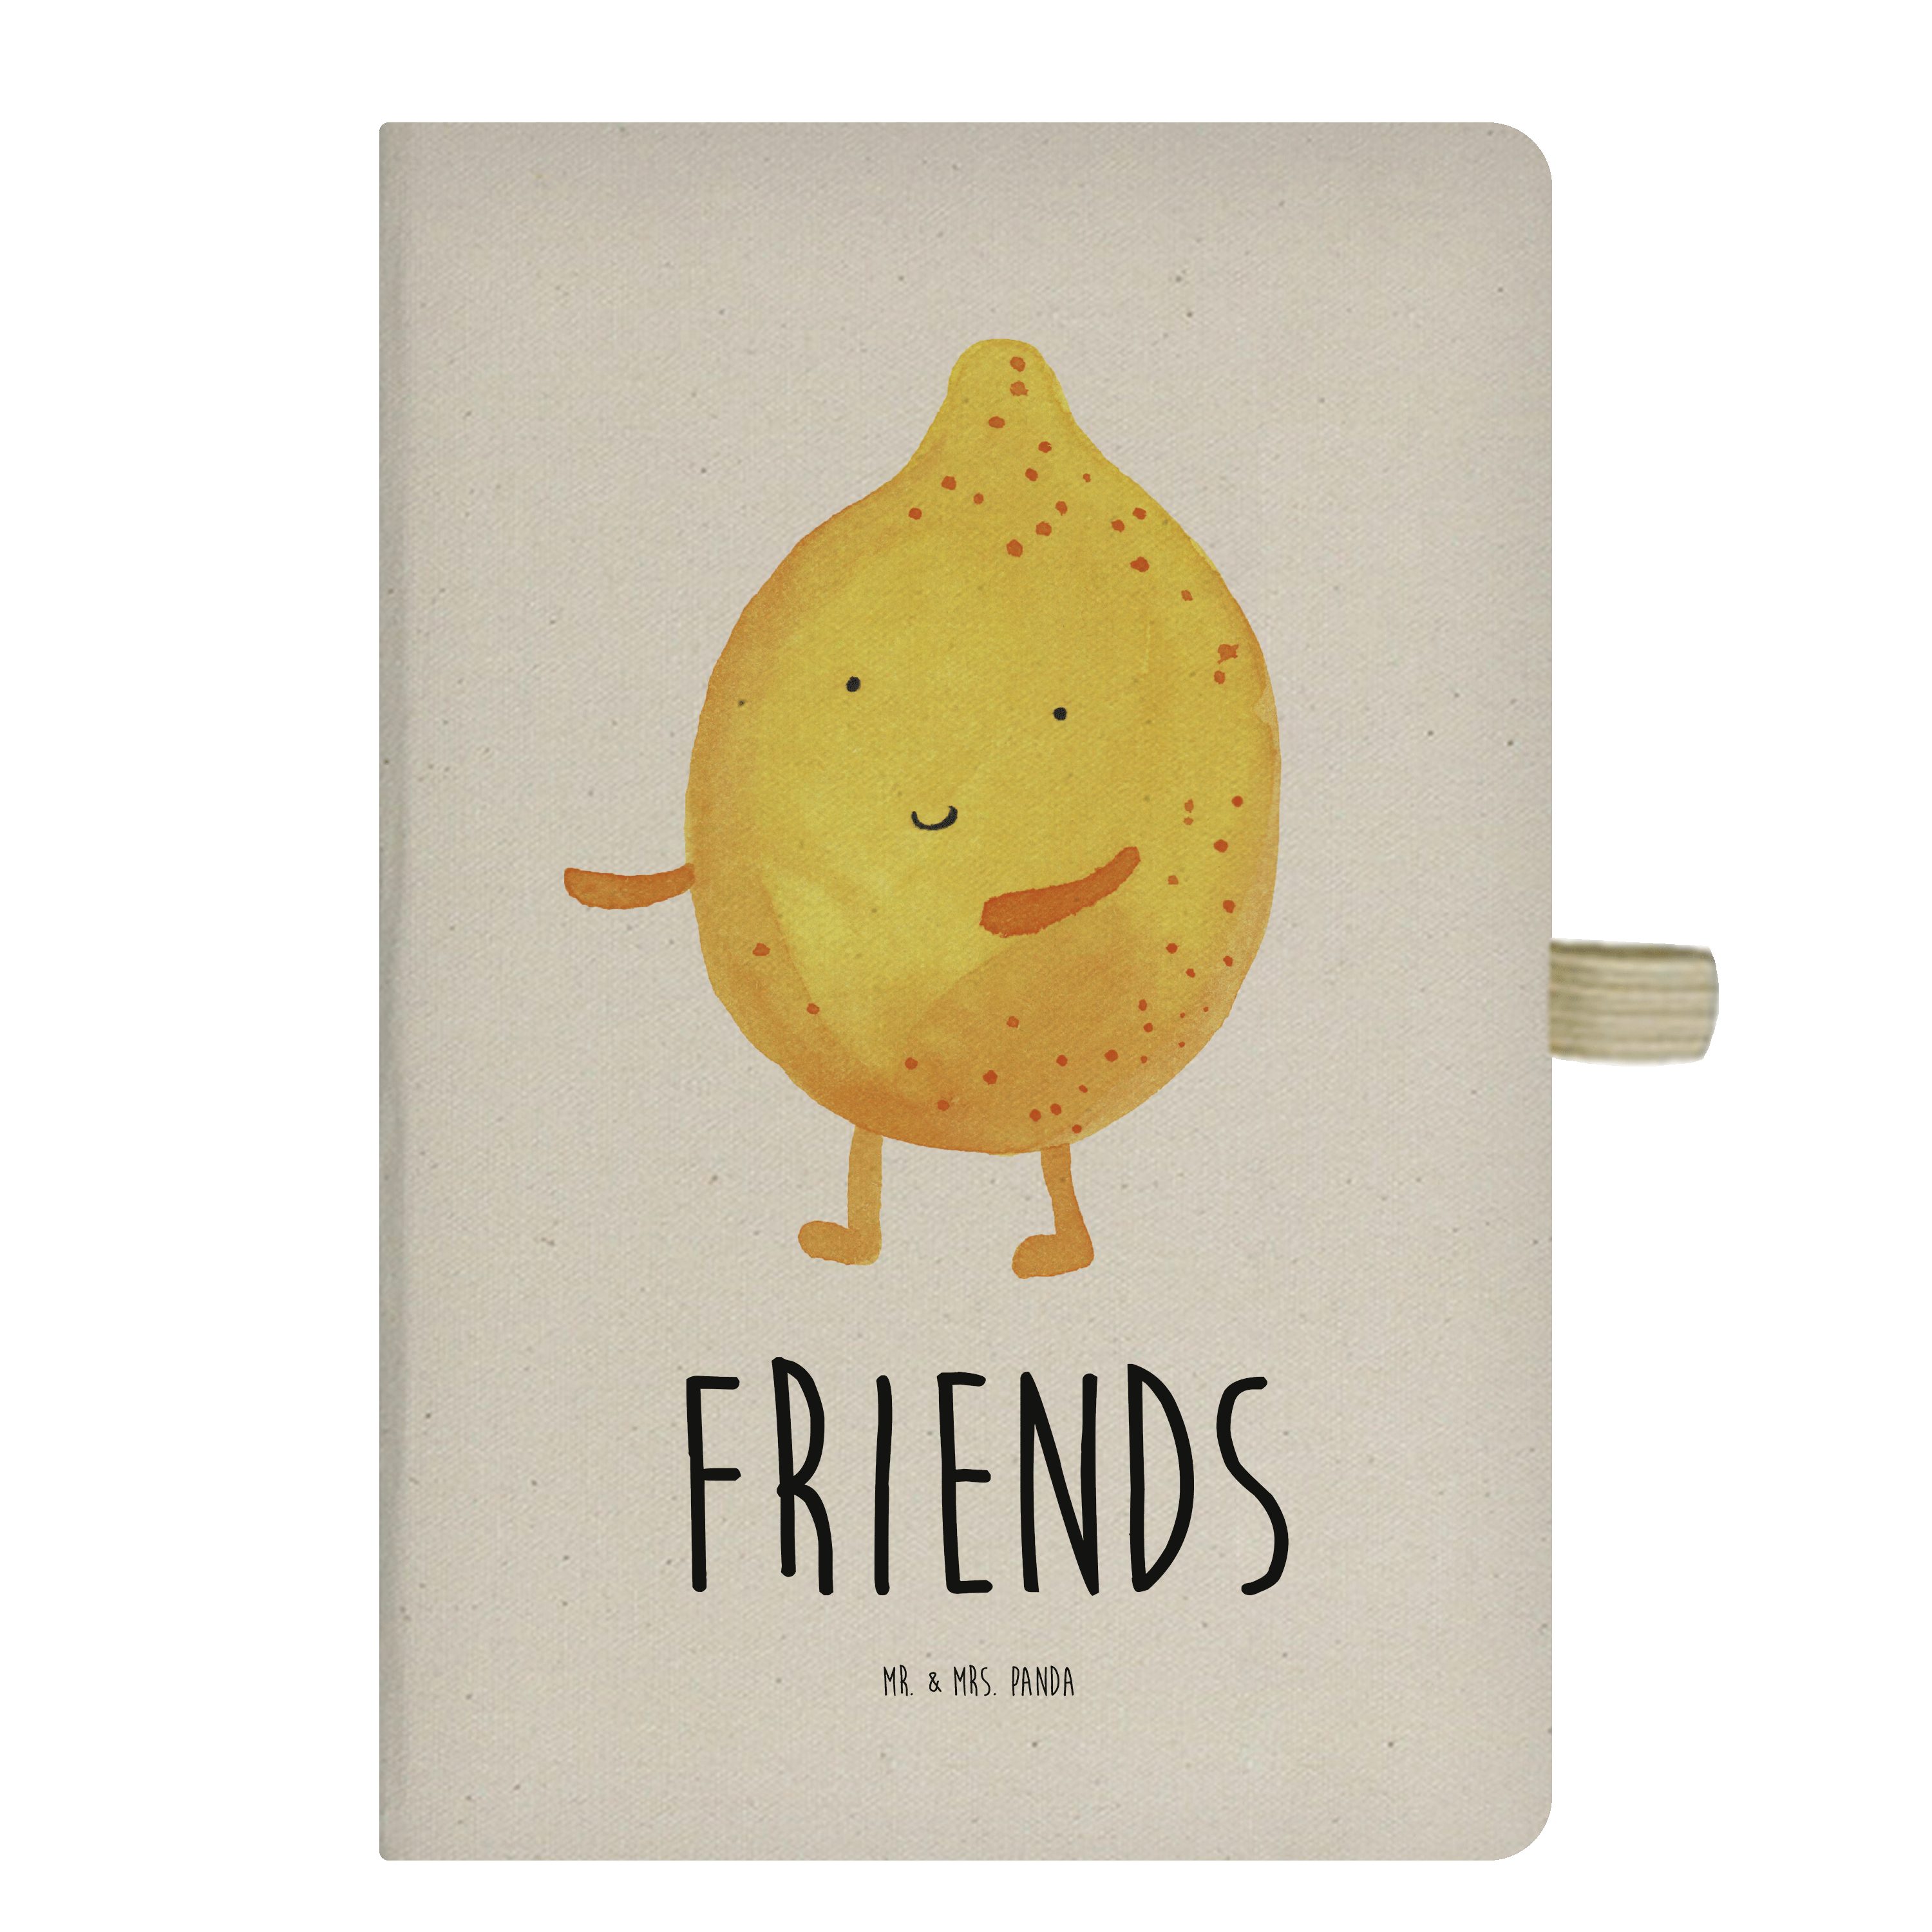 Mr. & Mrs. Panda Notizbuch BestFriends-Lemon - Transparent - Geschenk, Journal, Schreibbuch, Ein Mr. & Mrs. Panda